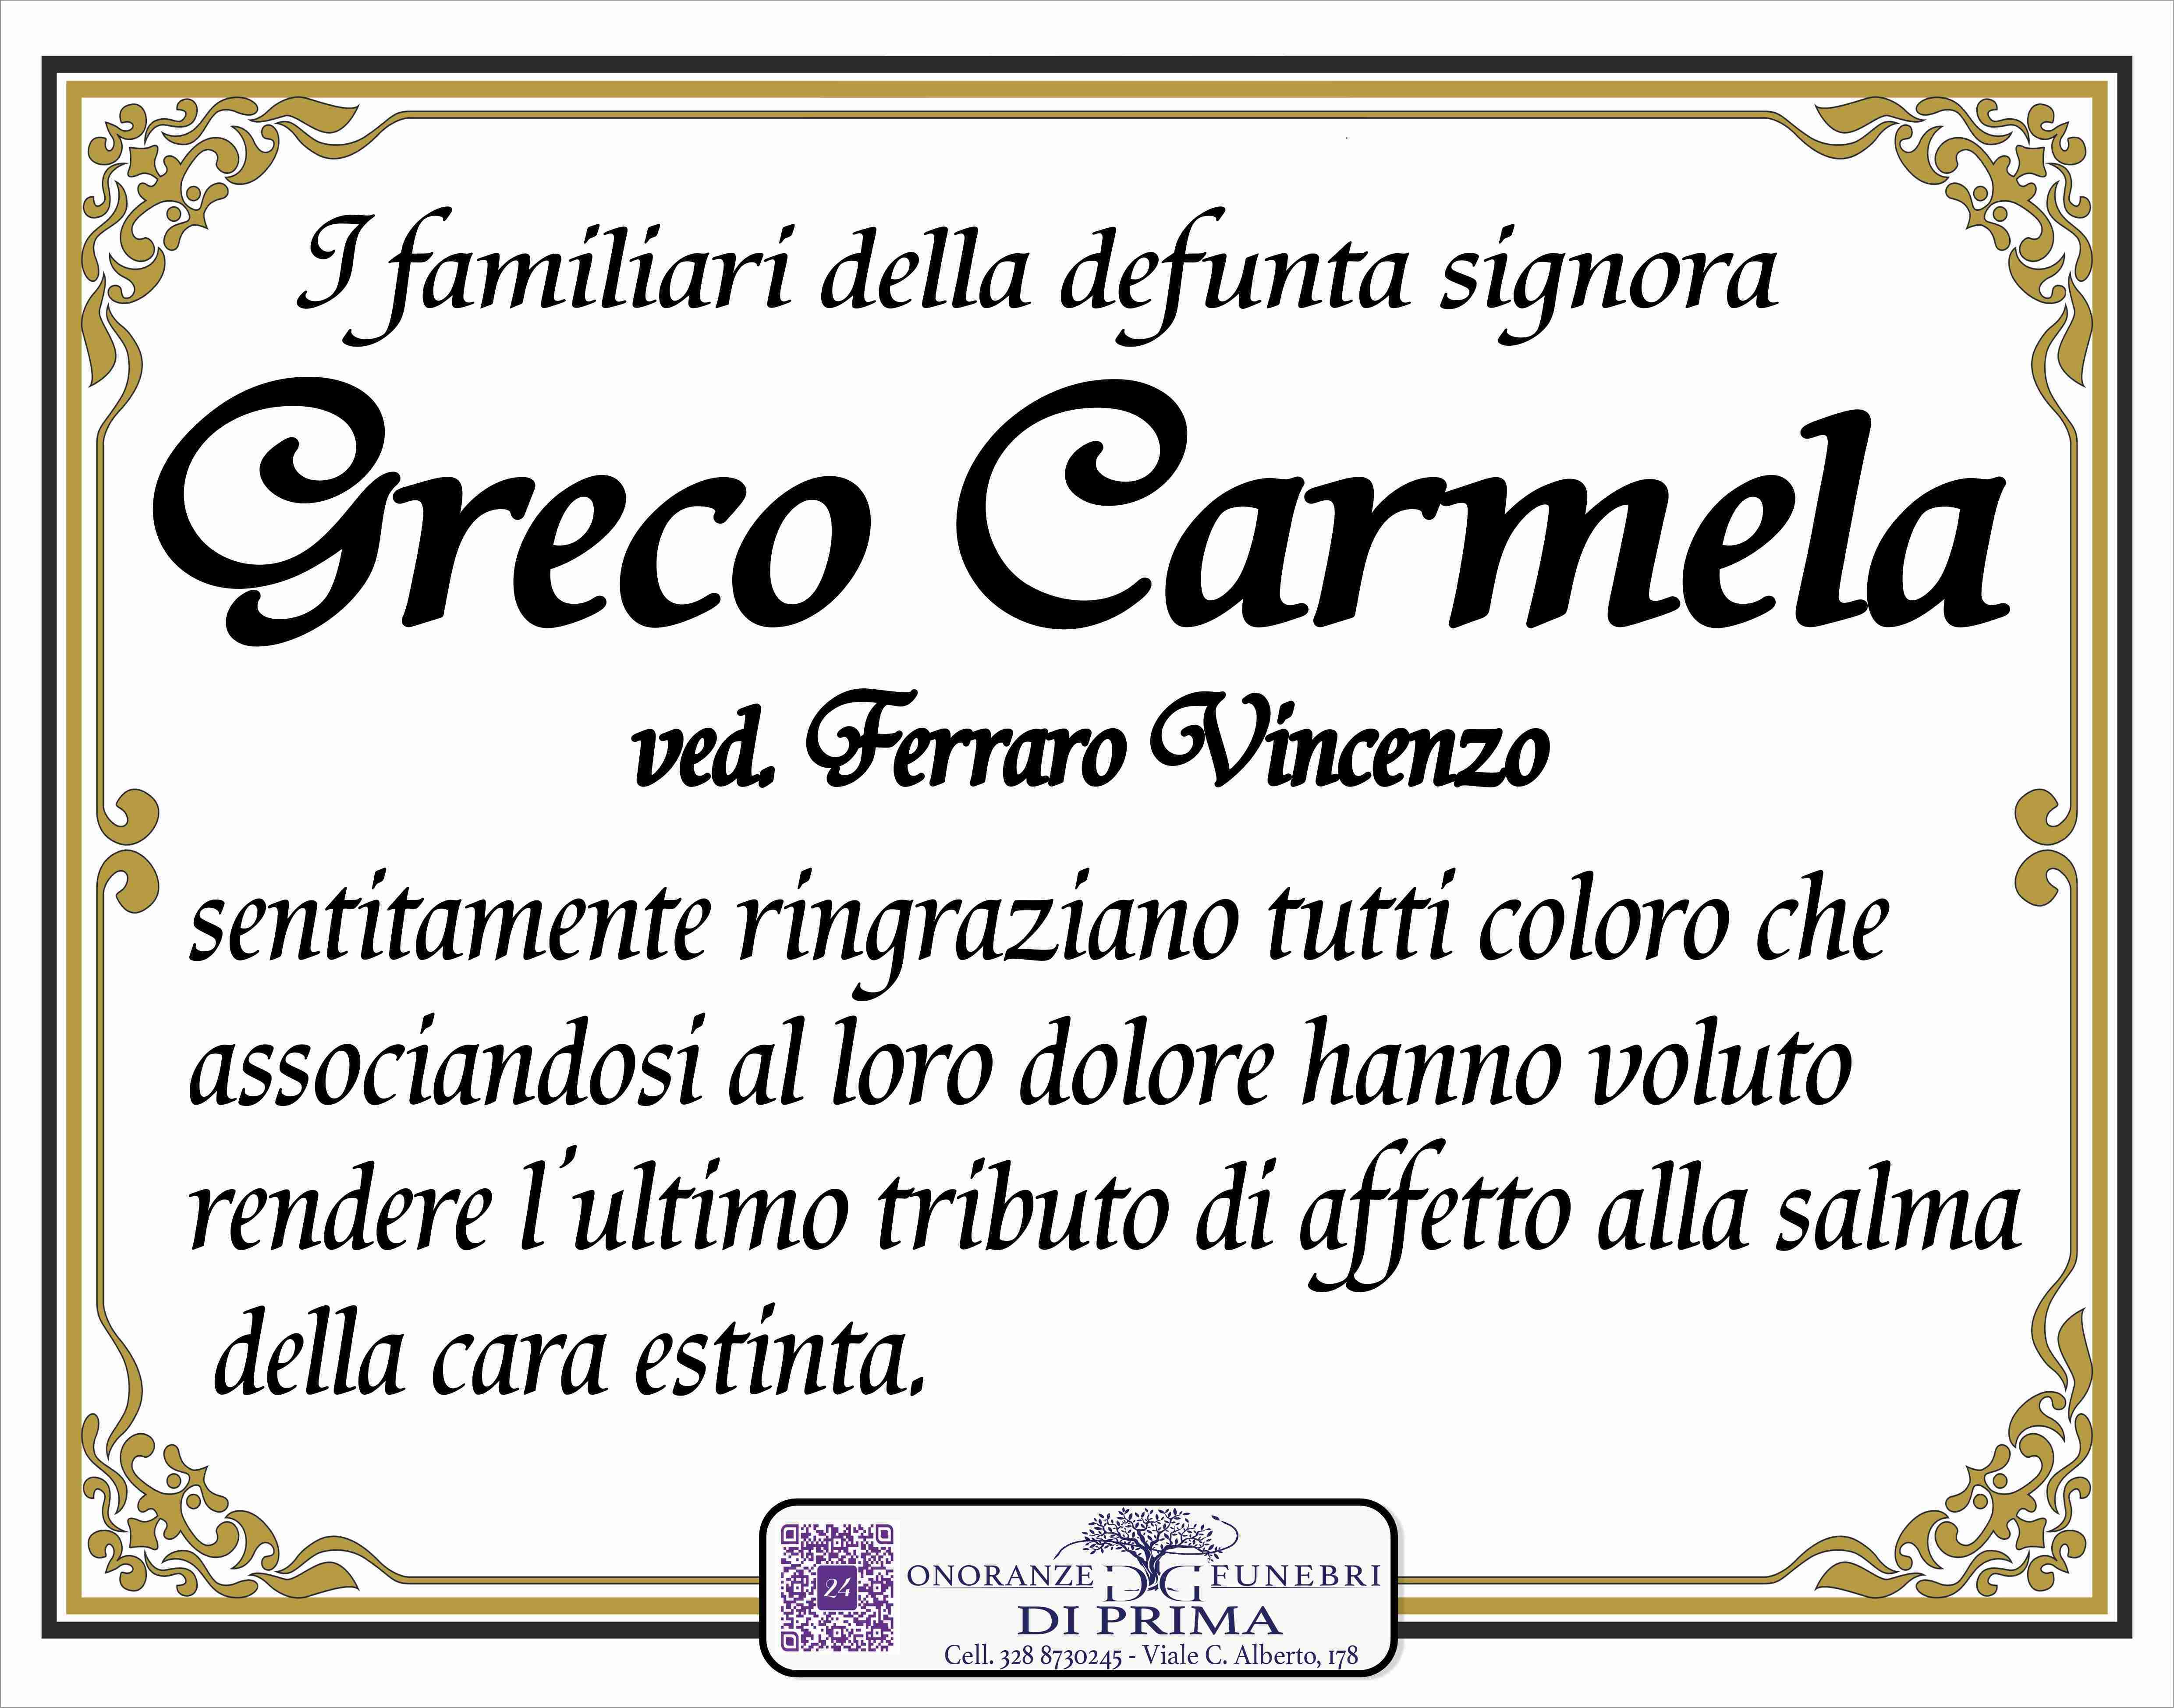 Carmela Greco